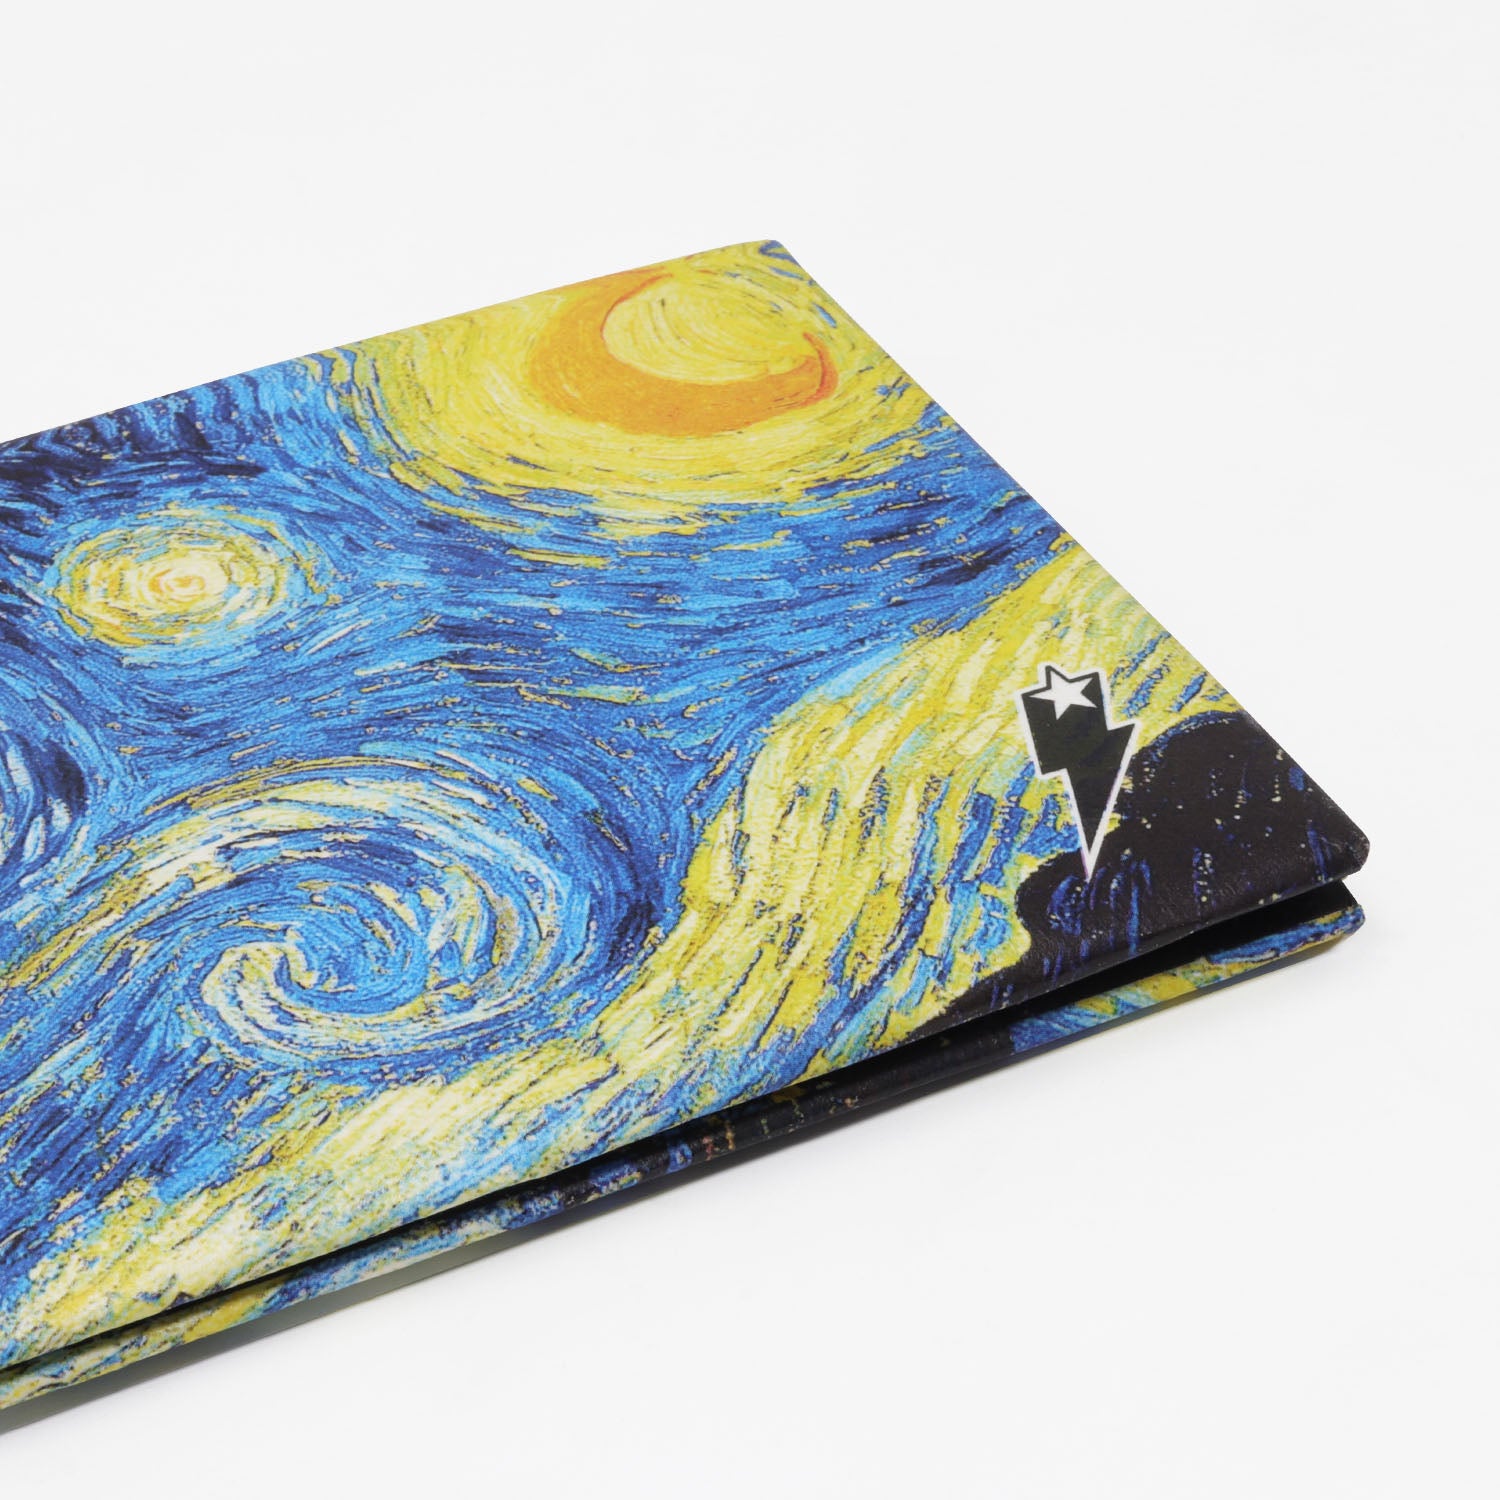 Supervek Tyvek Wallet - Van Gogh Starry Night - Minimalist Card Holder for Men Women - Vegan Recyclable - Slim